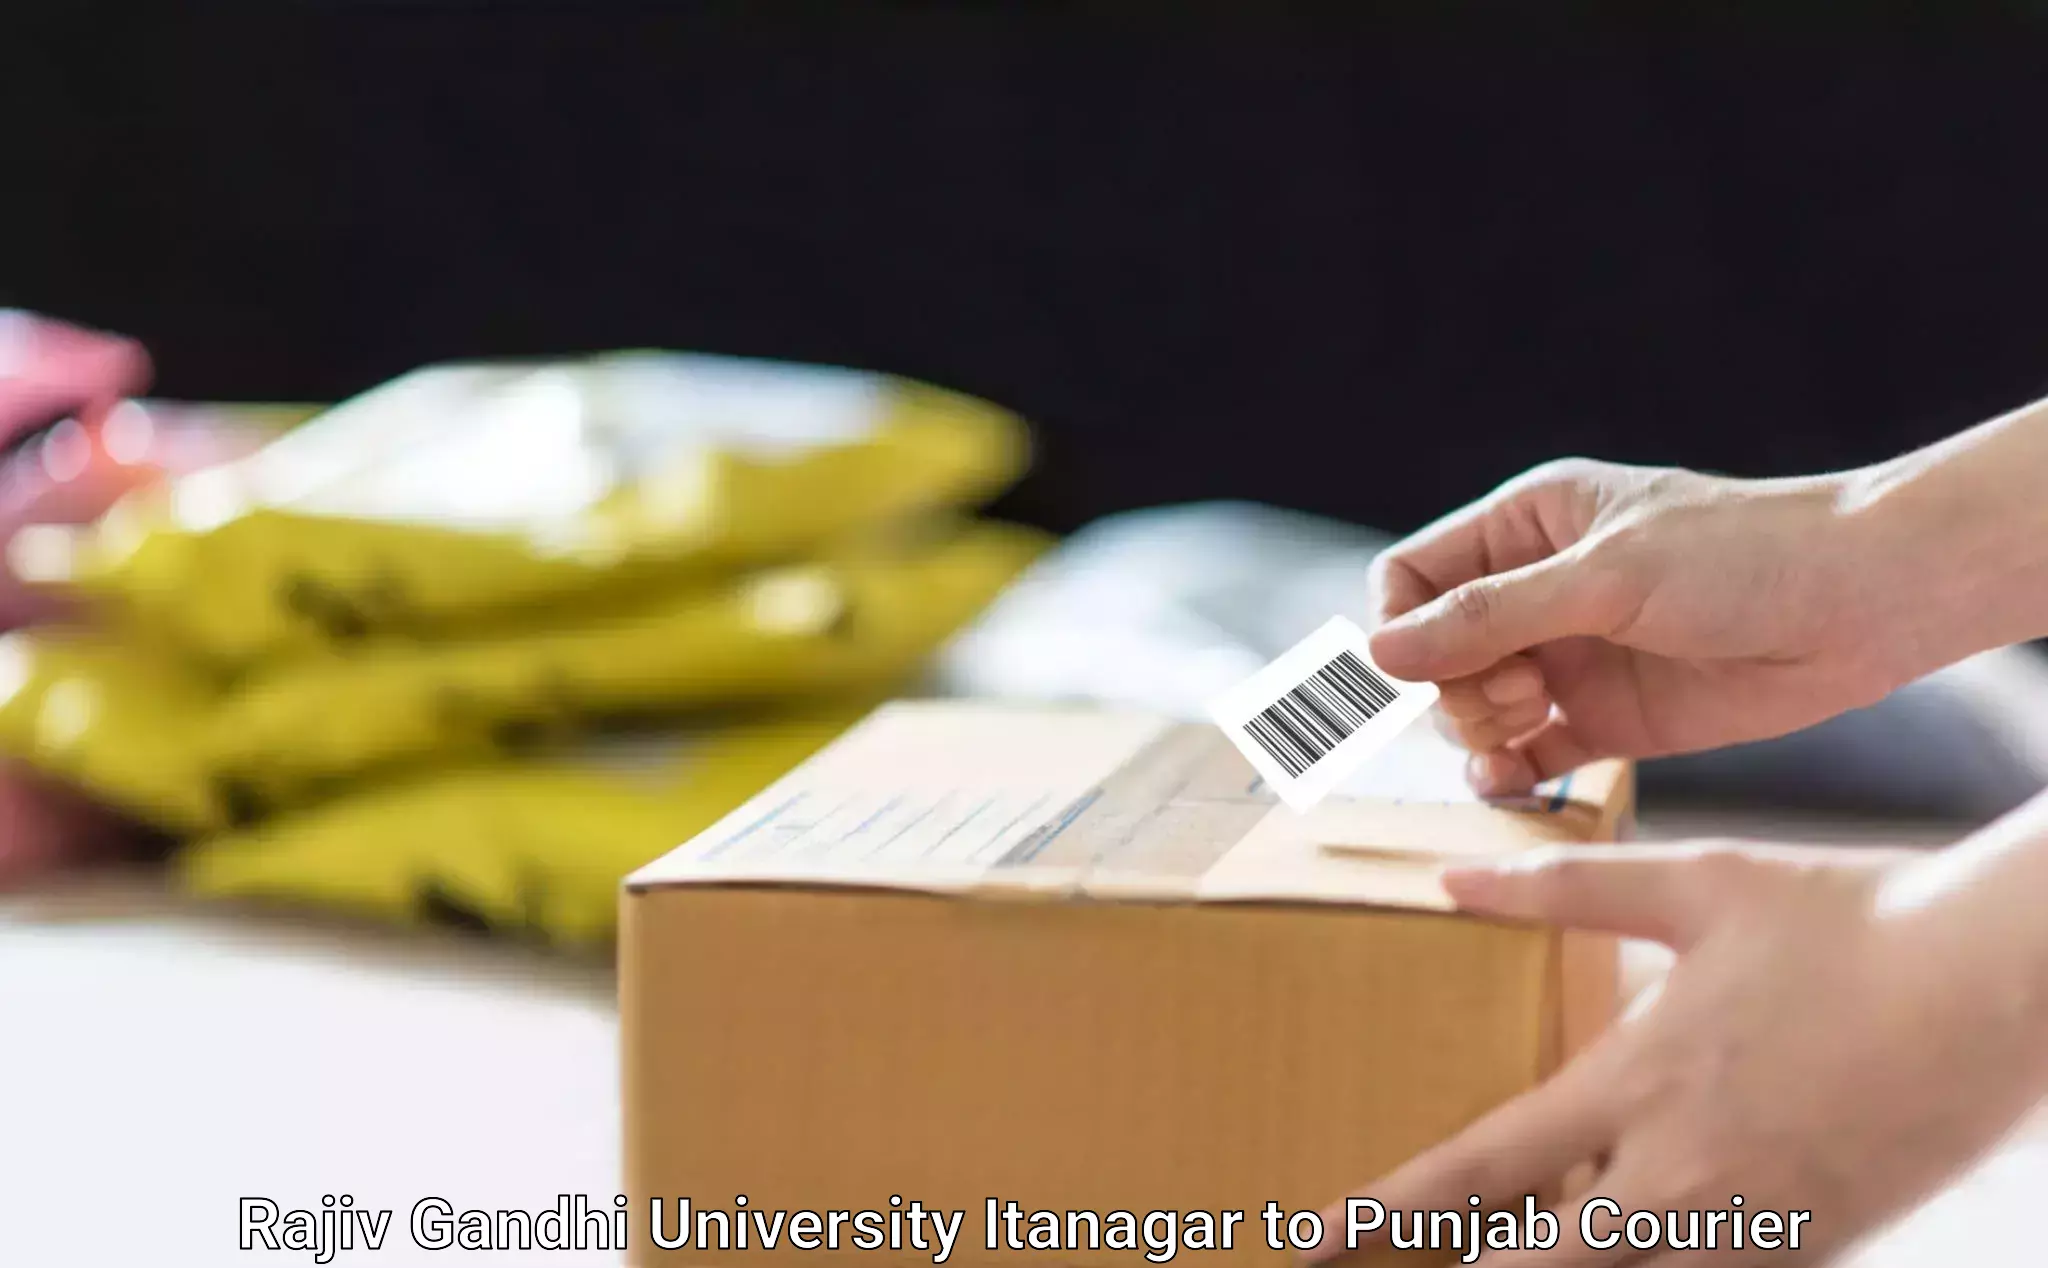 Efficient order fulfillment Rajiv Gandhi University Itanagar to Punjab